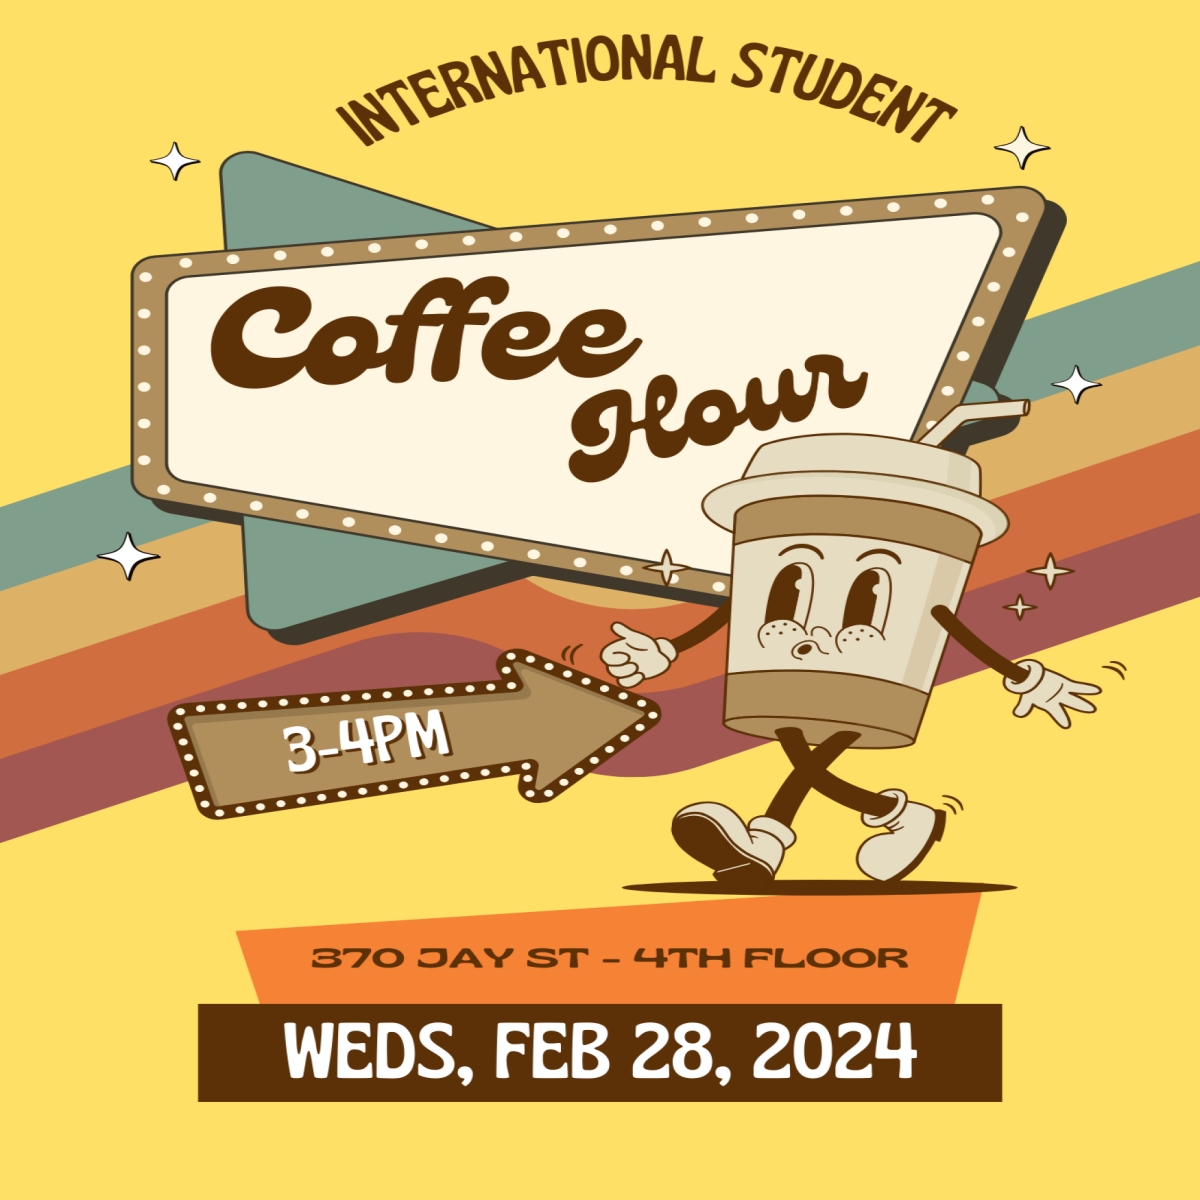 International student coffee hour, 3-4pm, 370 Jay street - 4th floor, weds feb 28 2024